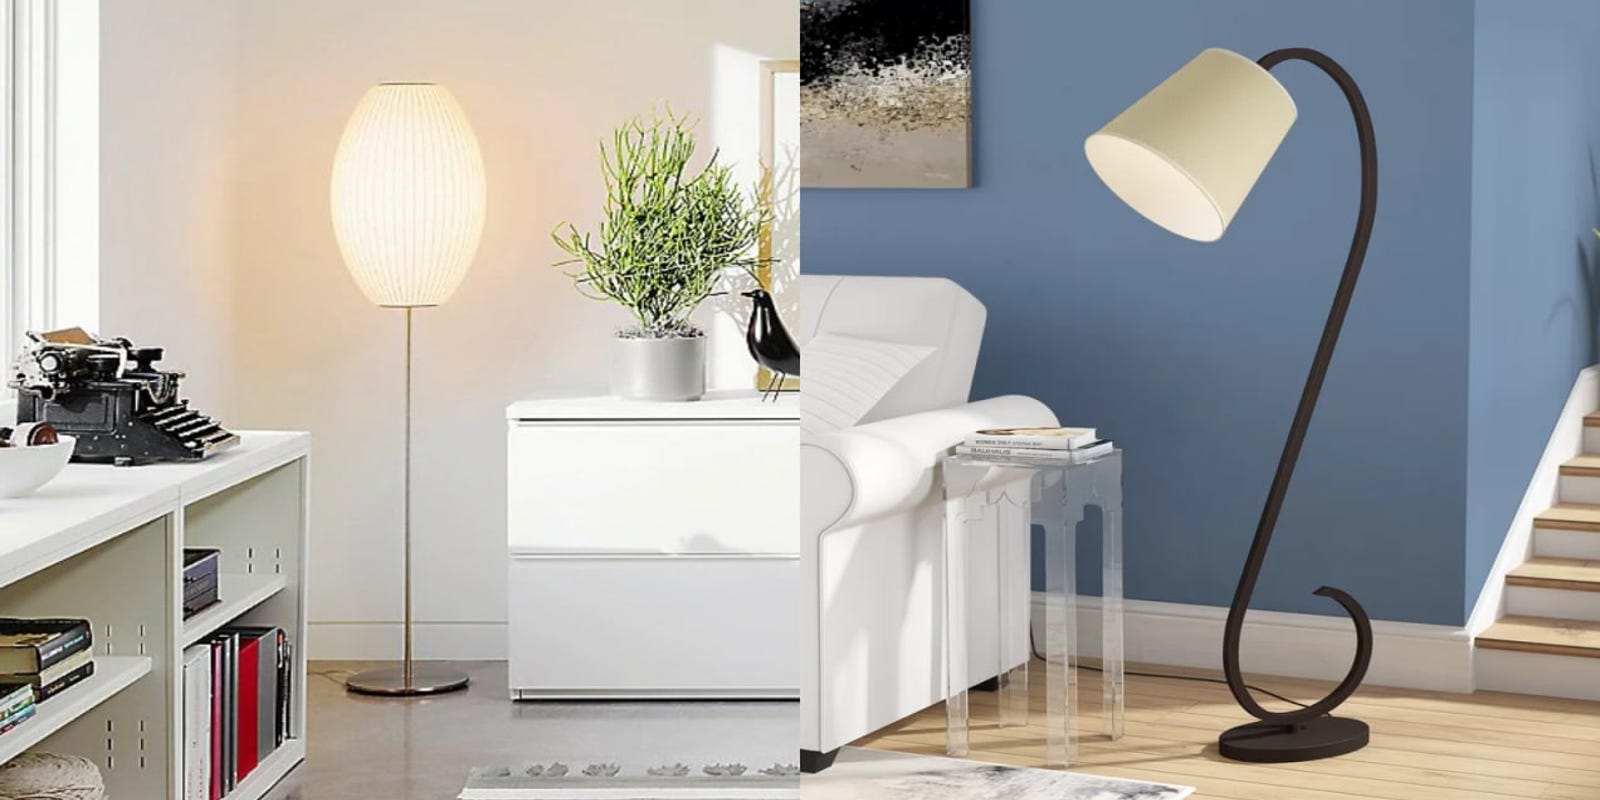 Uplighter Floor Lamps For Living Room